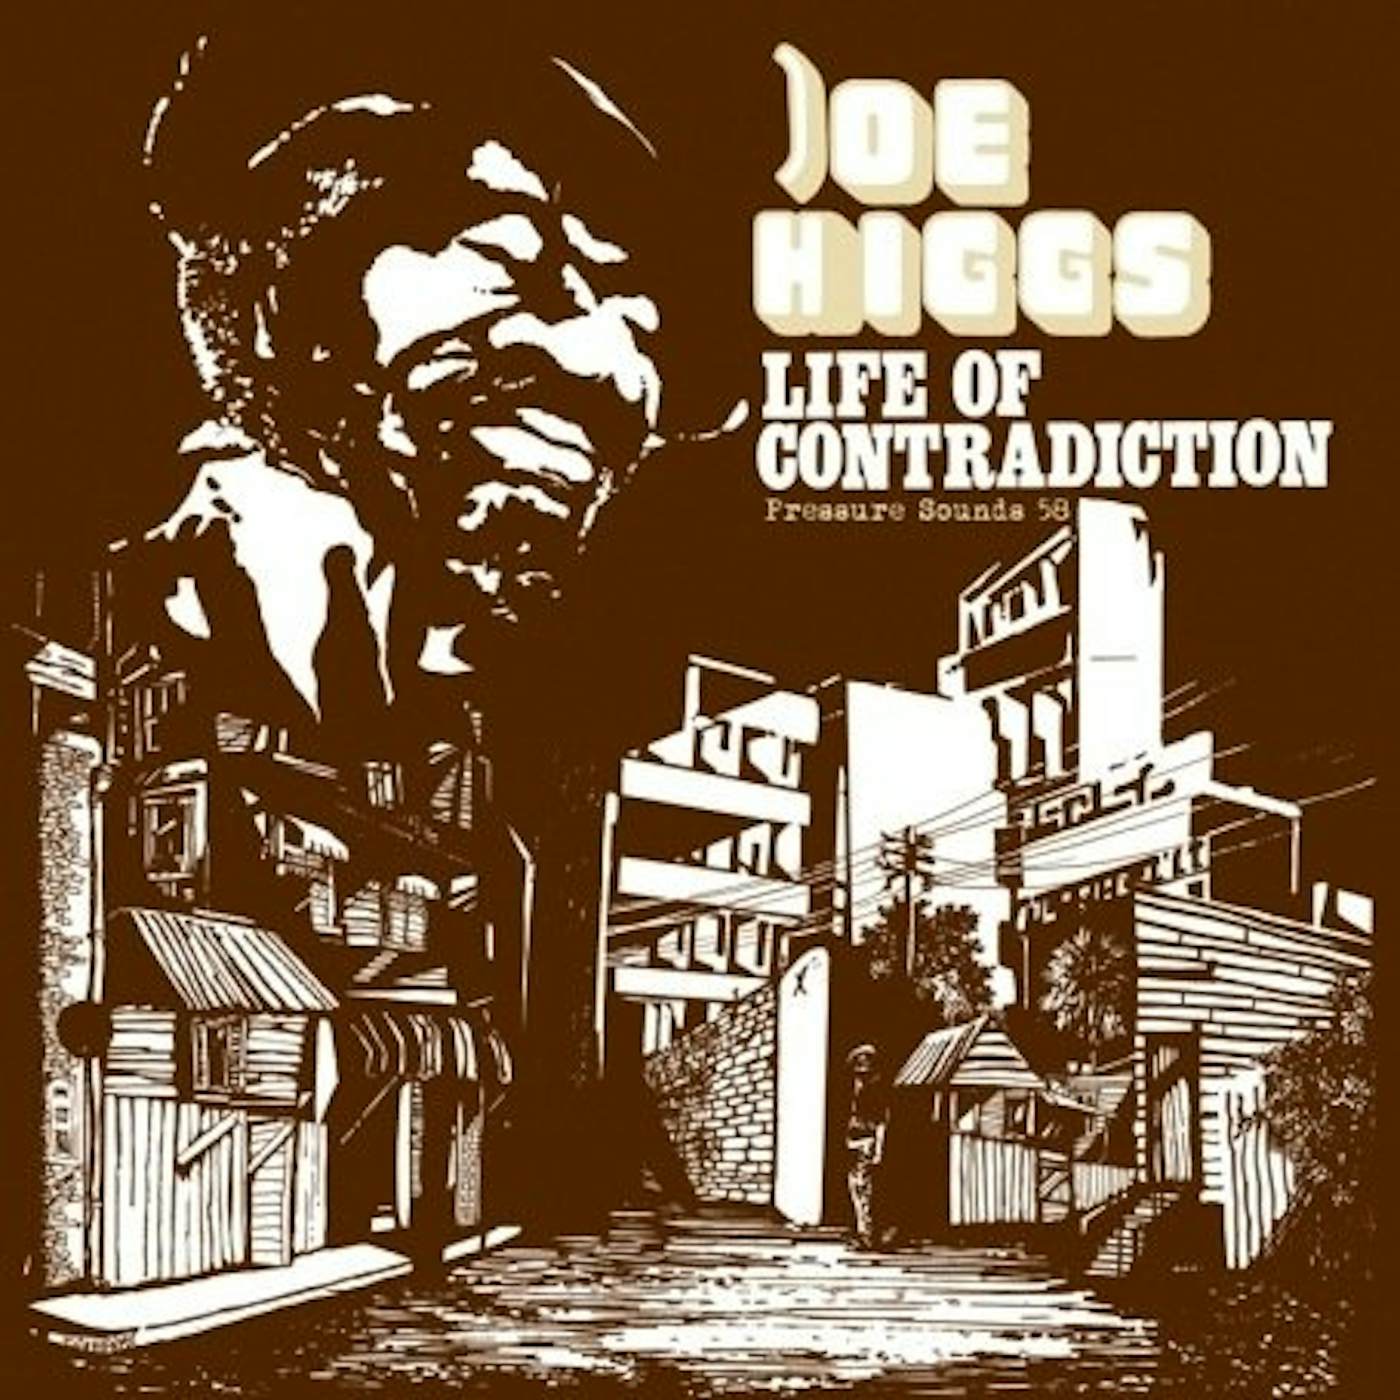 Joe Higgs Life of Contradiction Vinyl Record